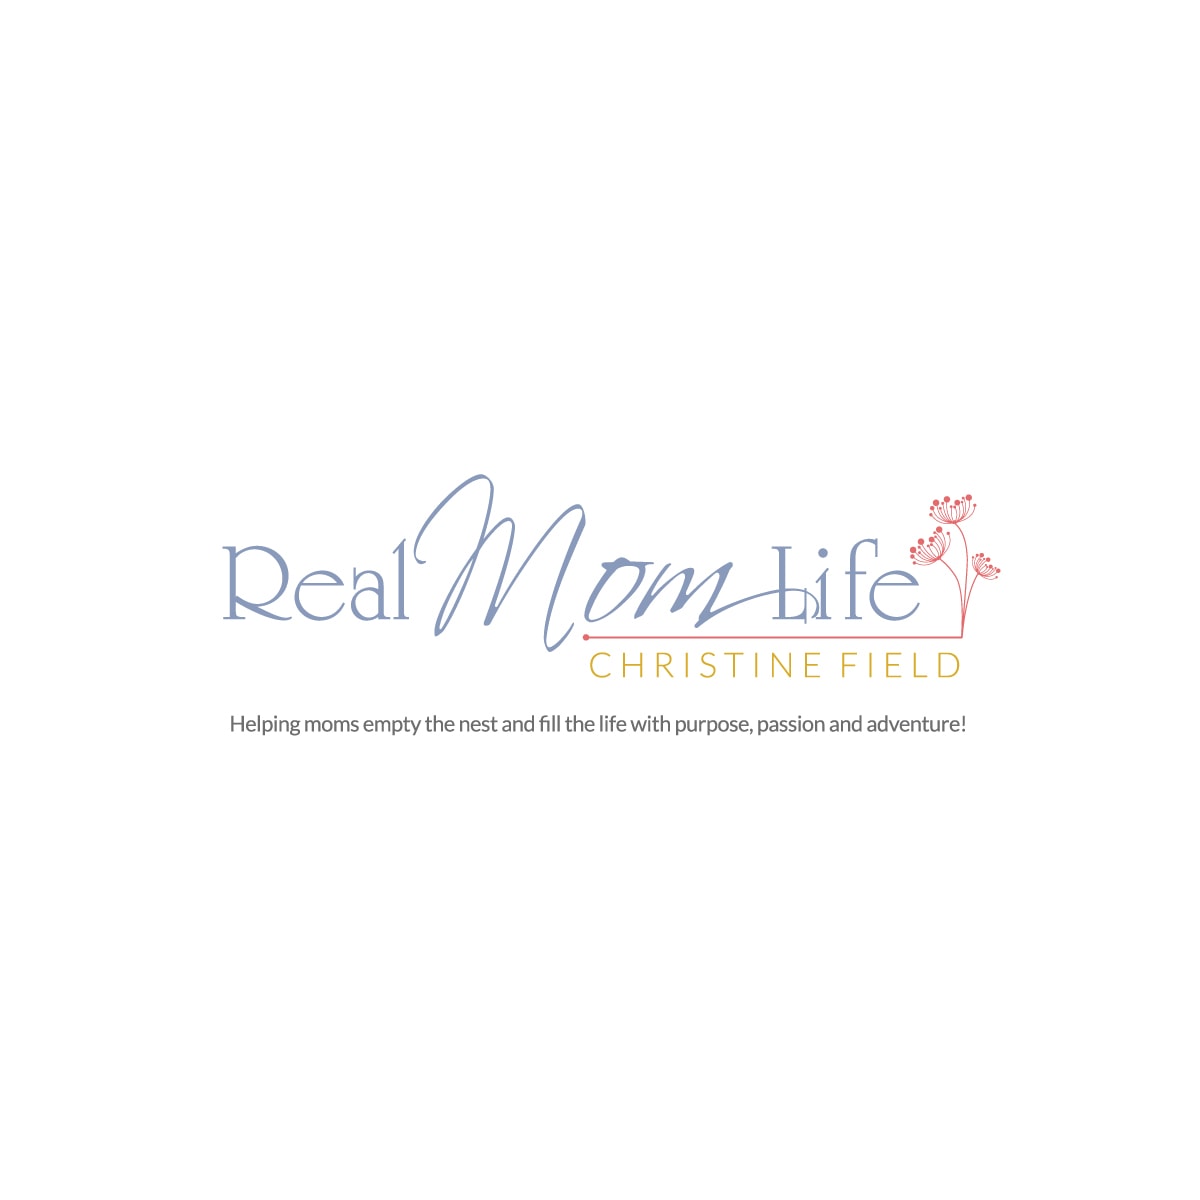 Real Mom Life Blog Main Logo full color